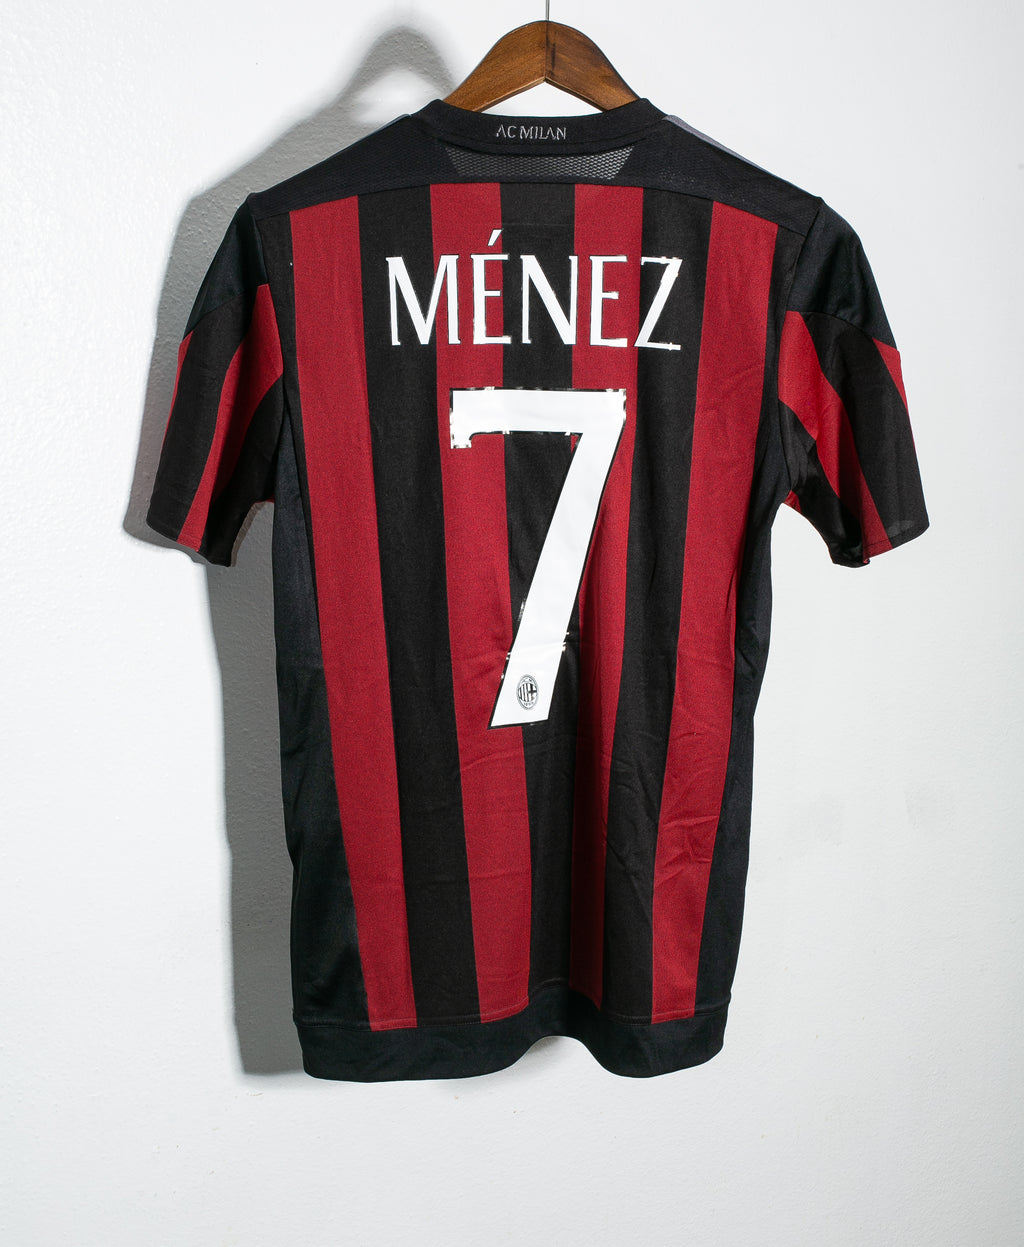 AC Milan No7 Menez Home Soccer Club Jersey